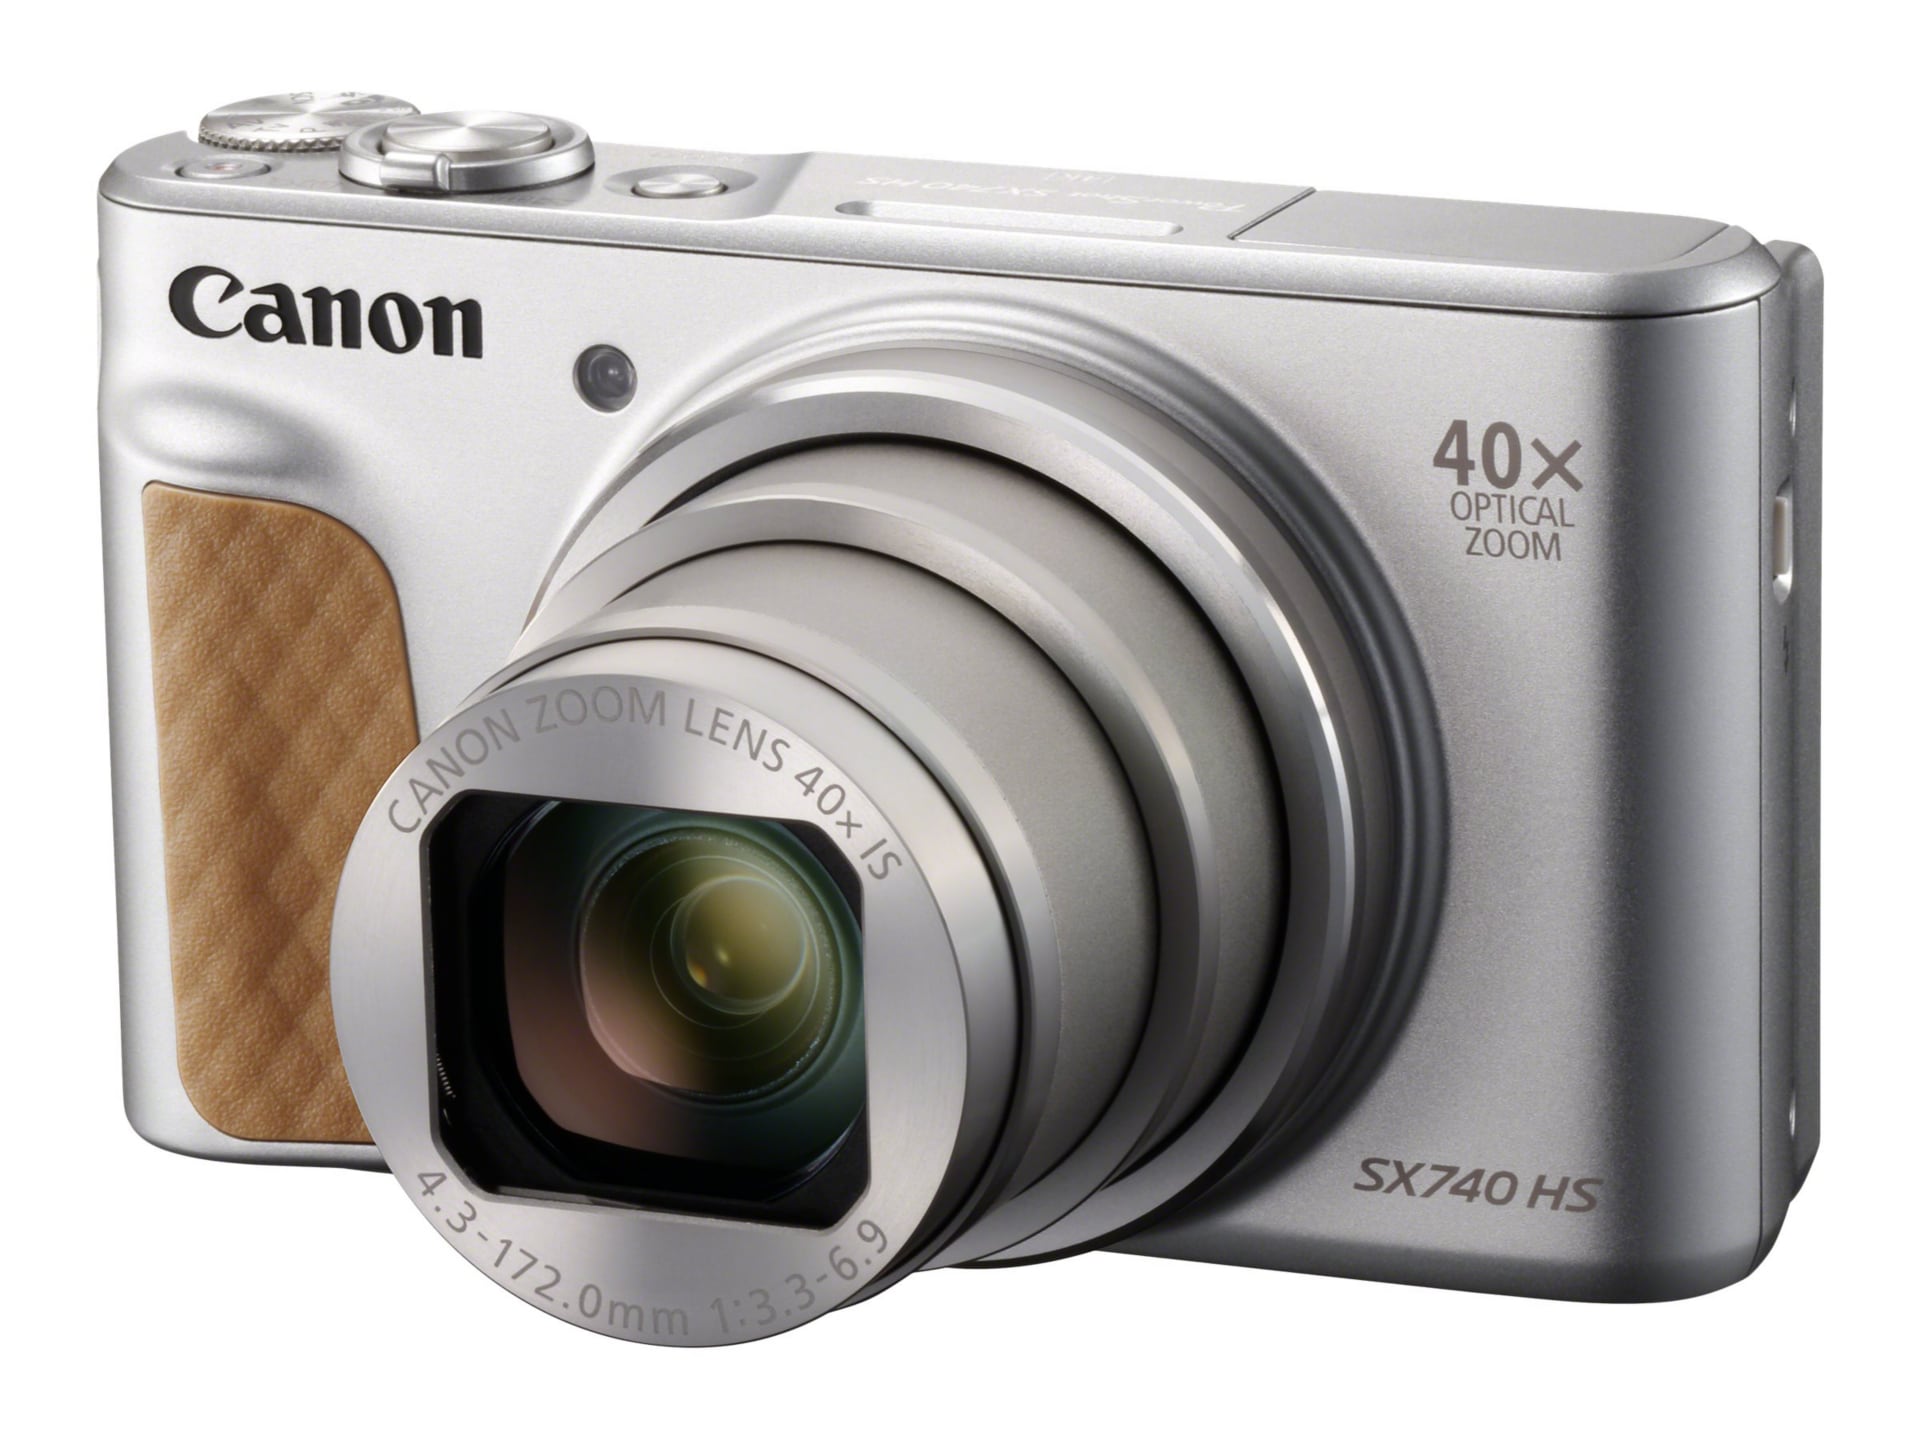 Canon PowerShot SX740 HS - digital camera - 2956C001 - Cameras